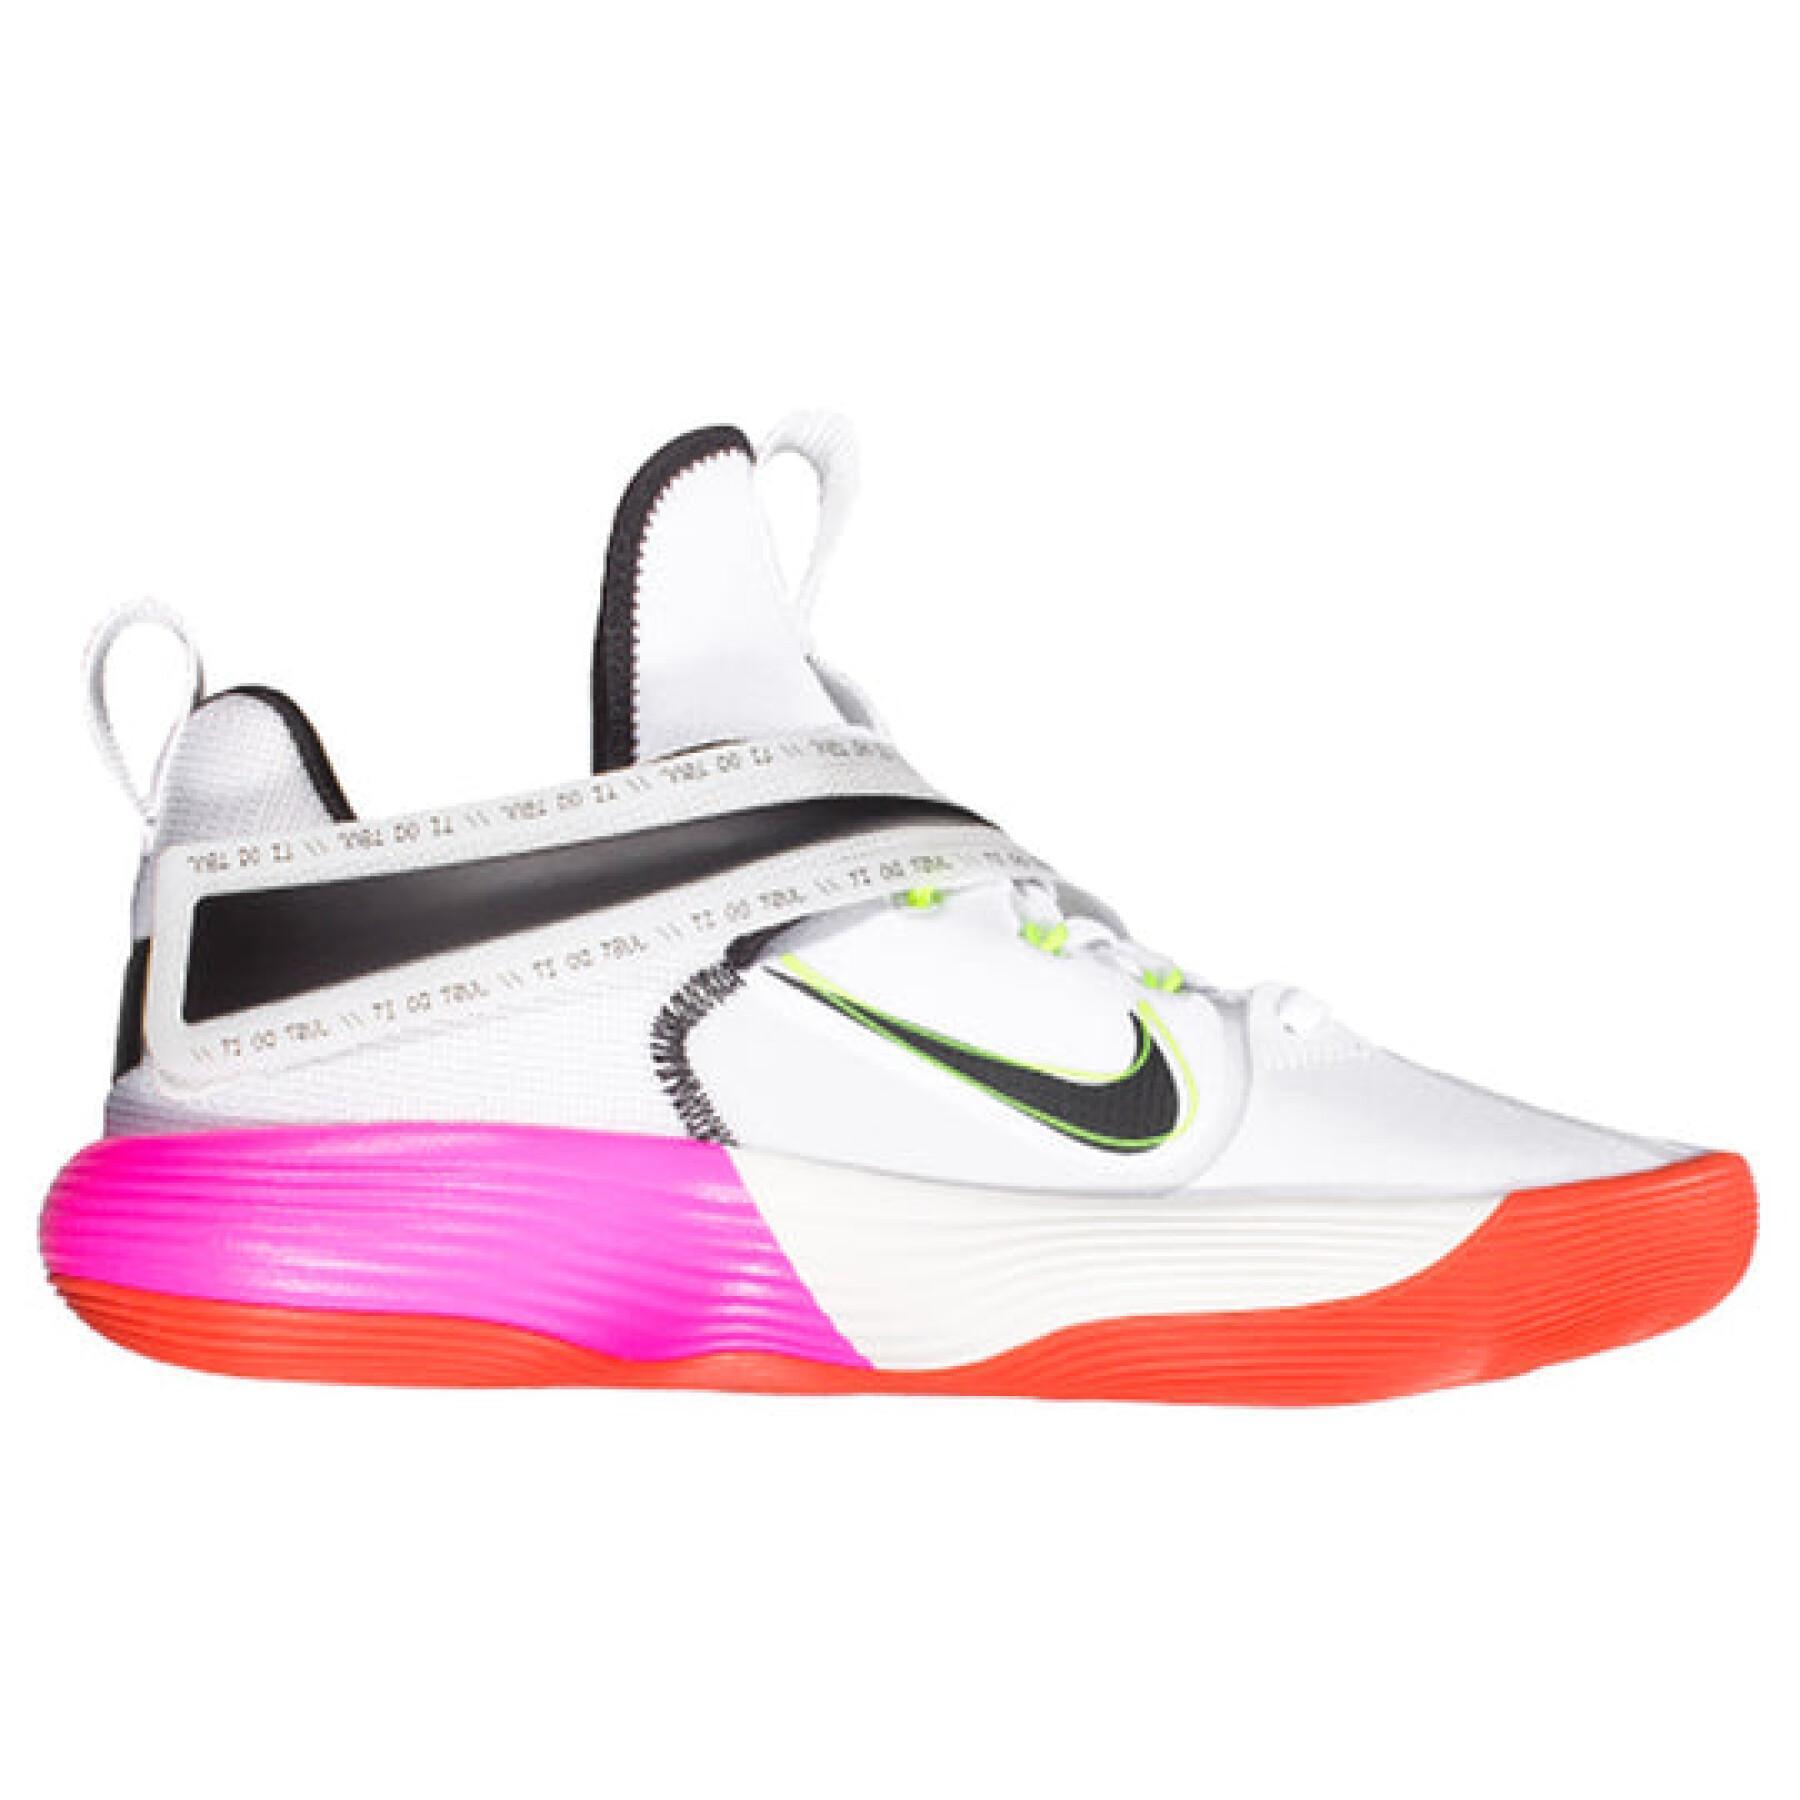 Chaussures Nike React Hyperset